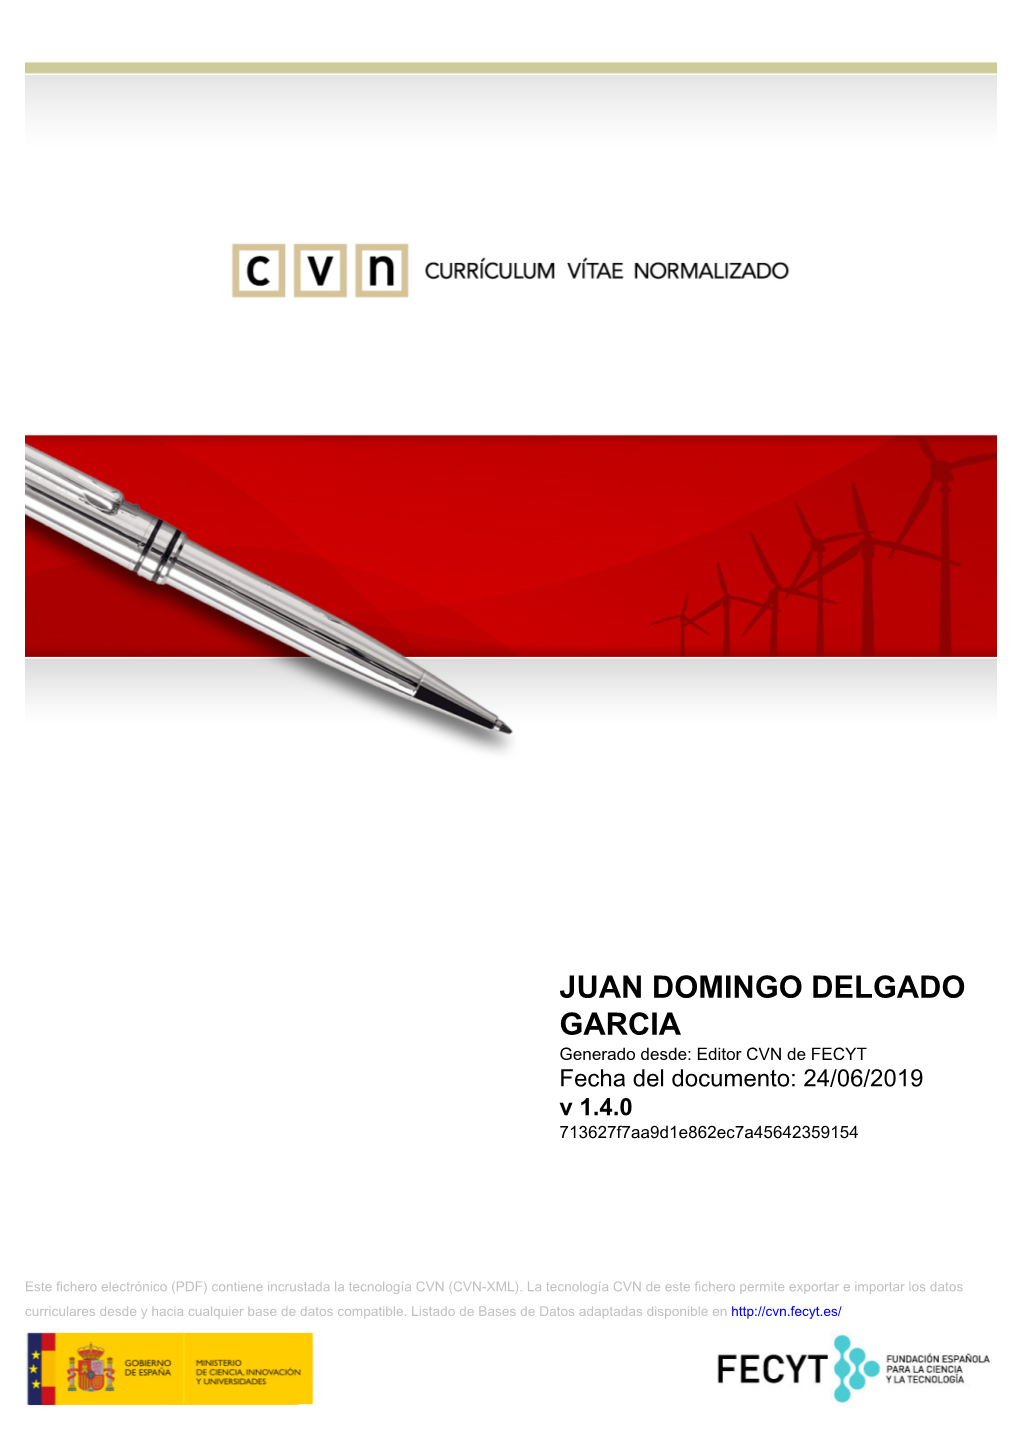 JUAN DOMINGO DELGADO GARCIA Generado Desde: Editor CVN De FECYT Fecha Del Documento: 24/06/2019 V 1.4.0 713627F7aa9d1e862ec7a45642359154